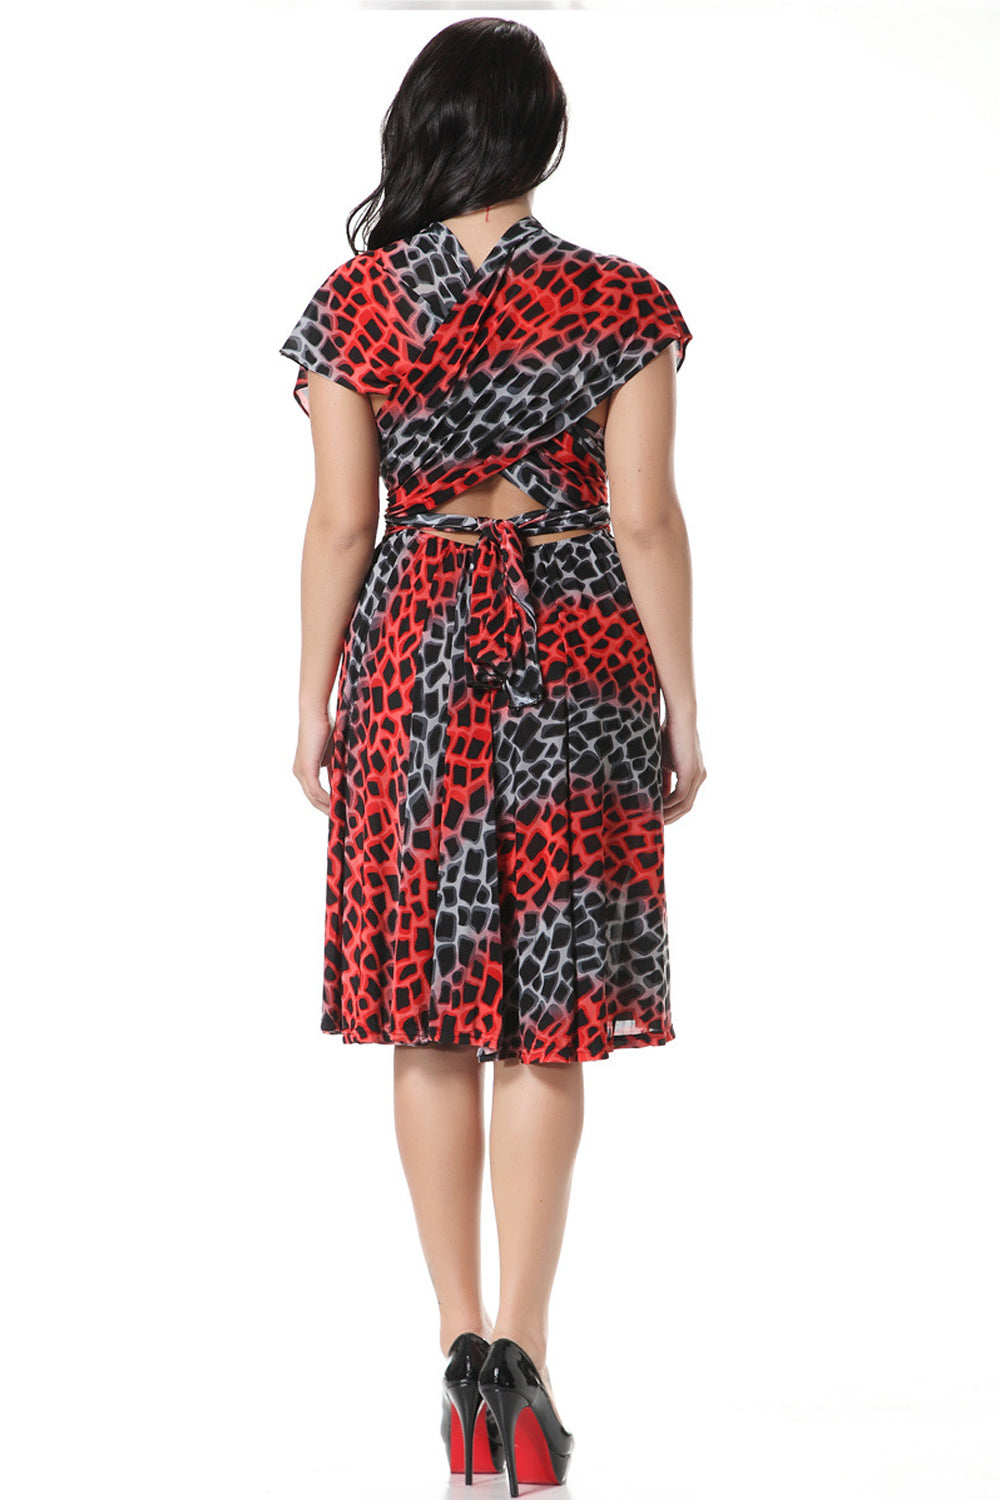 Ketty More Women Stylish Printed Pattern Easy V-Neck Slim Fit Waist Summer Knee Length Fashionable Dress-KMWD383